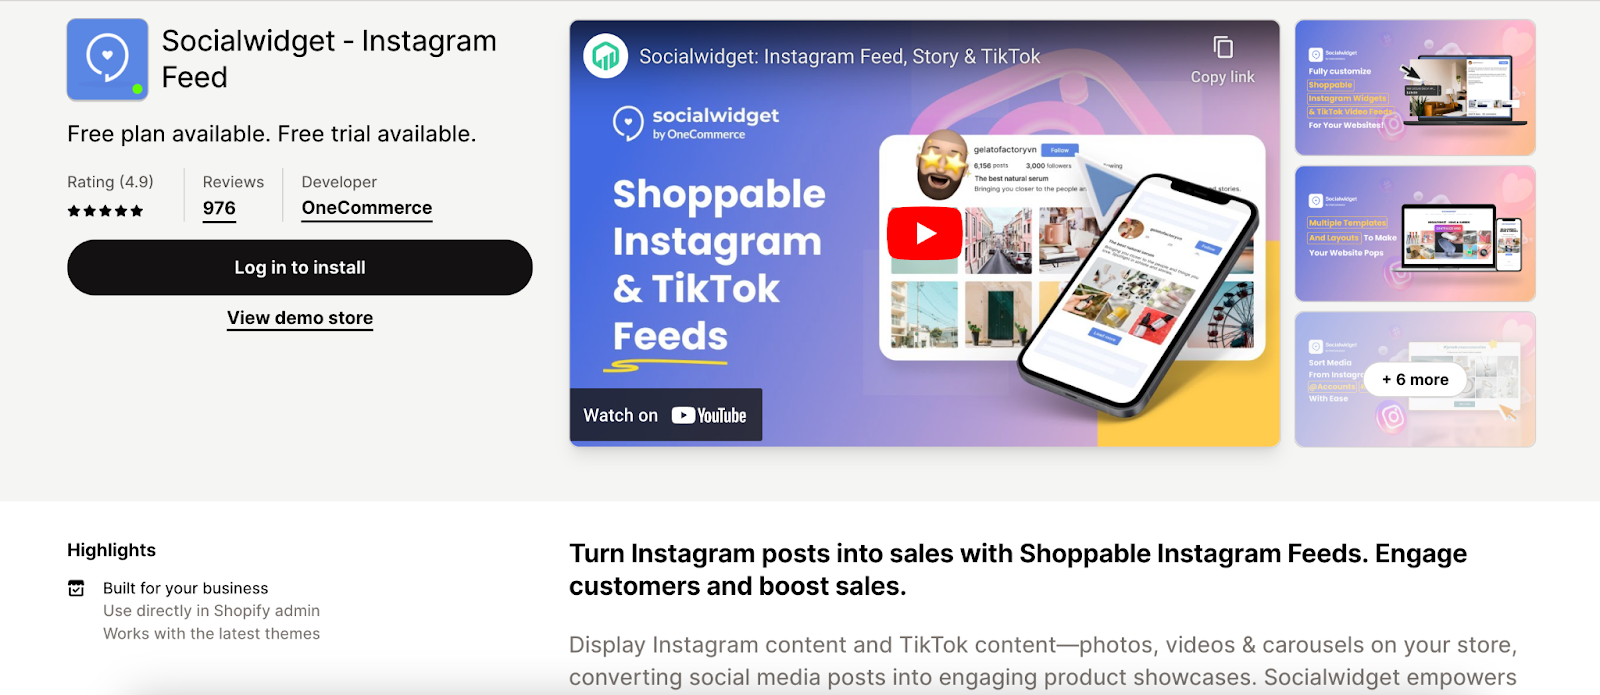 Socialwidget ‑ Instagram Feed